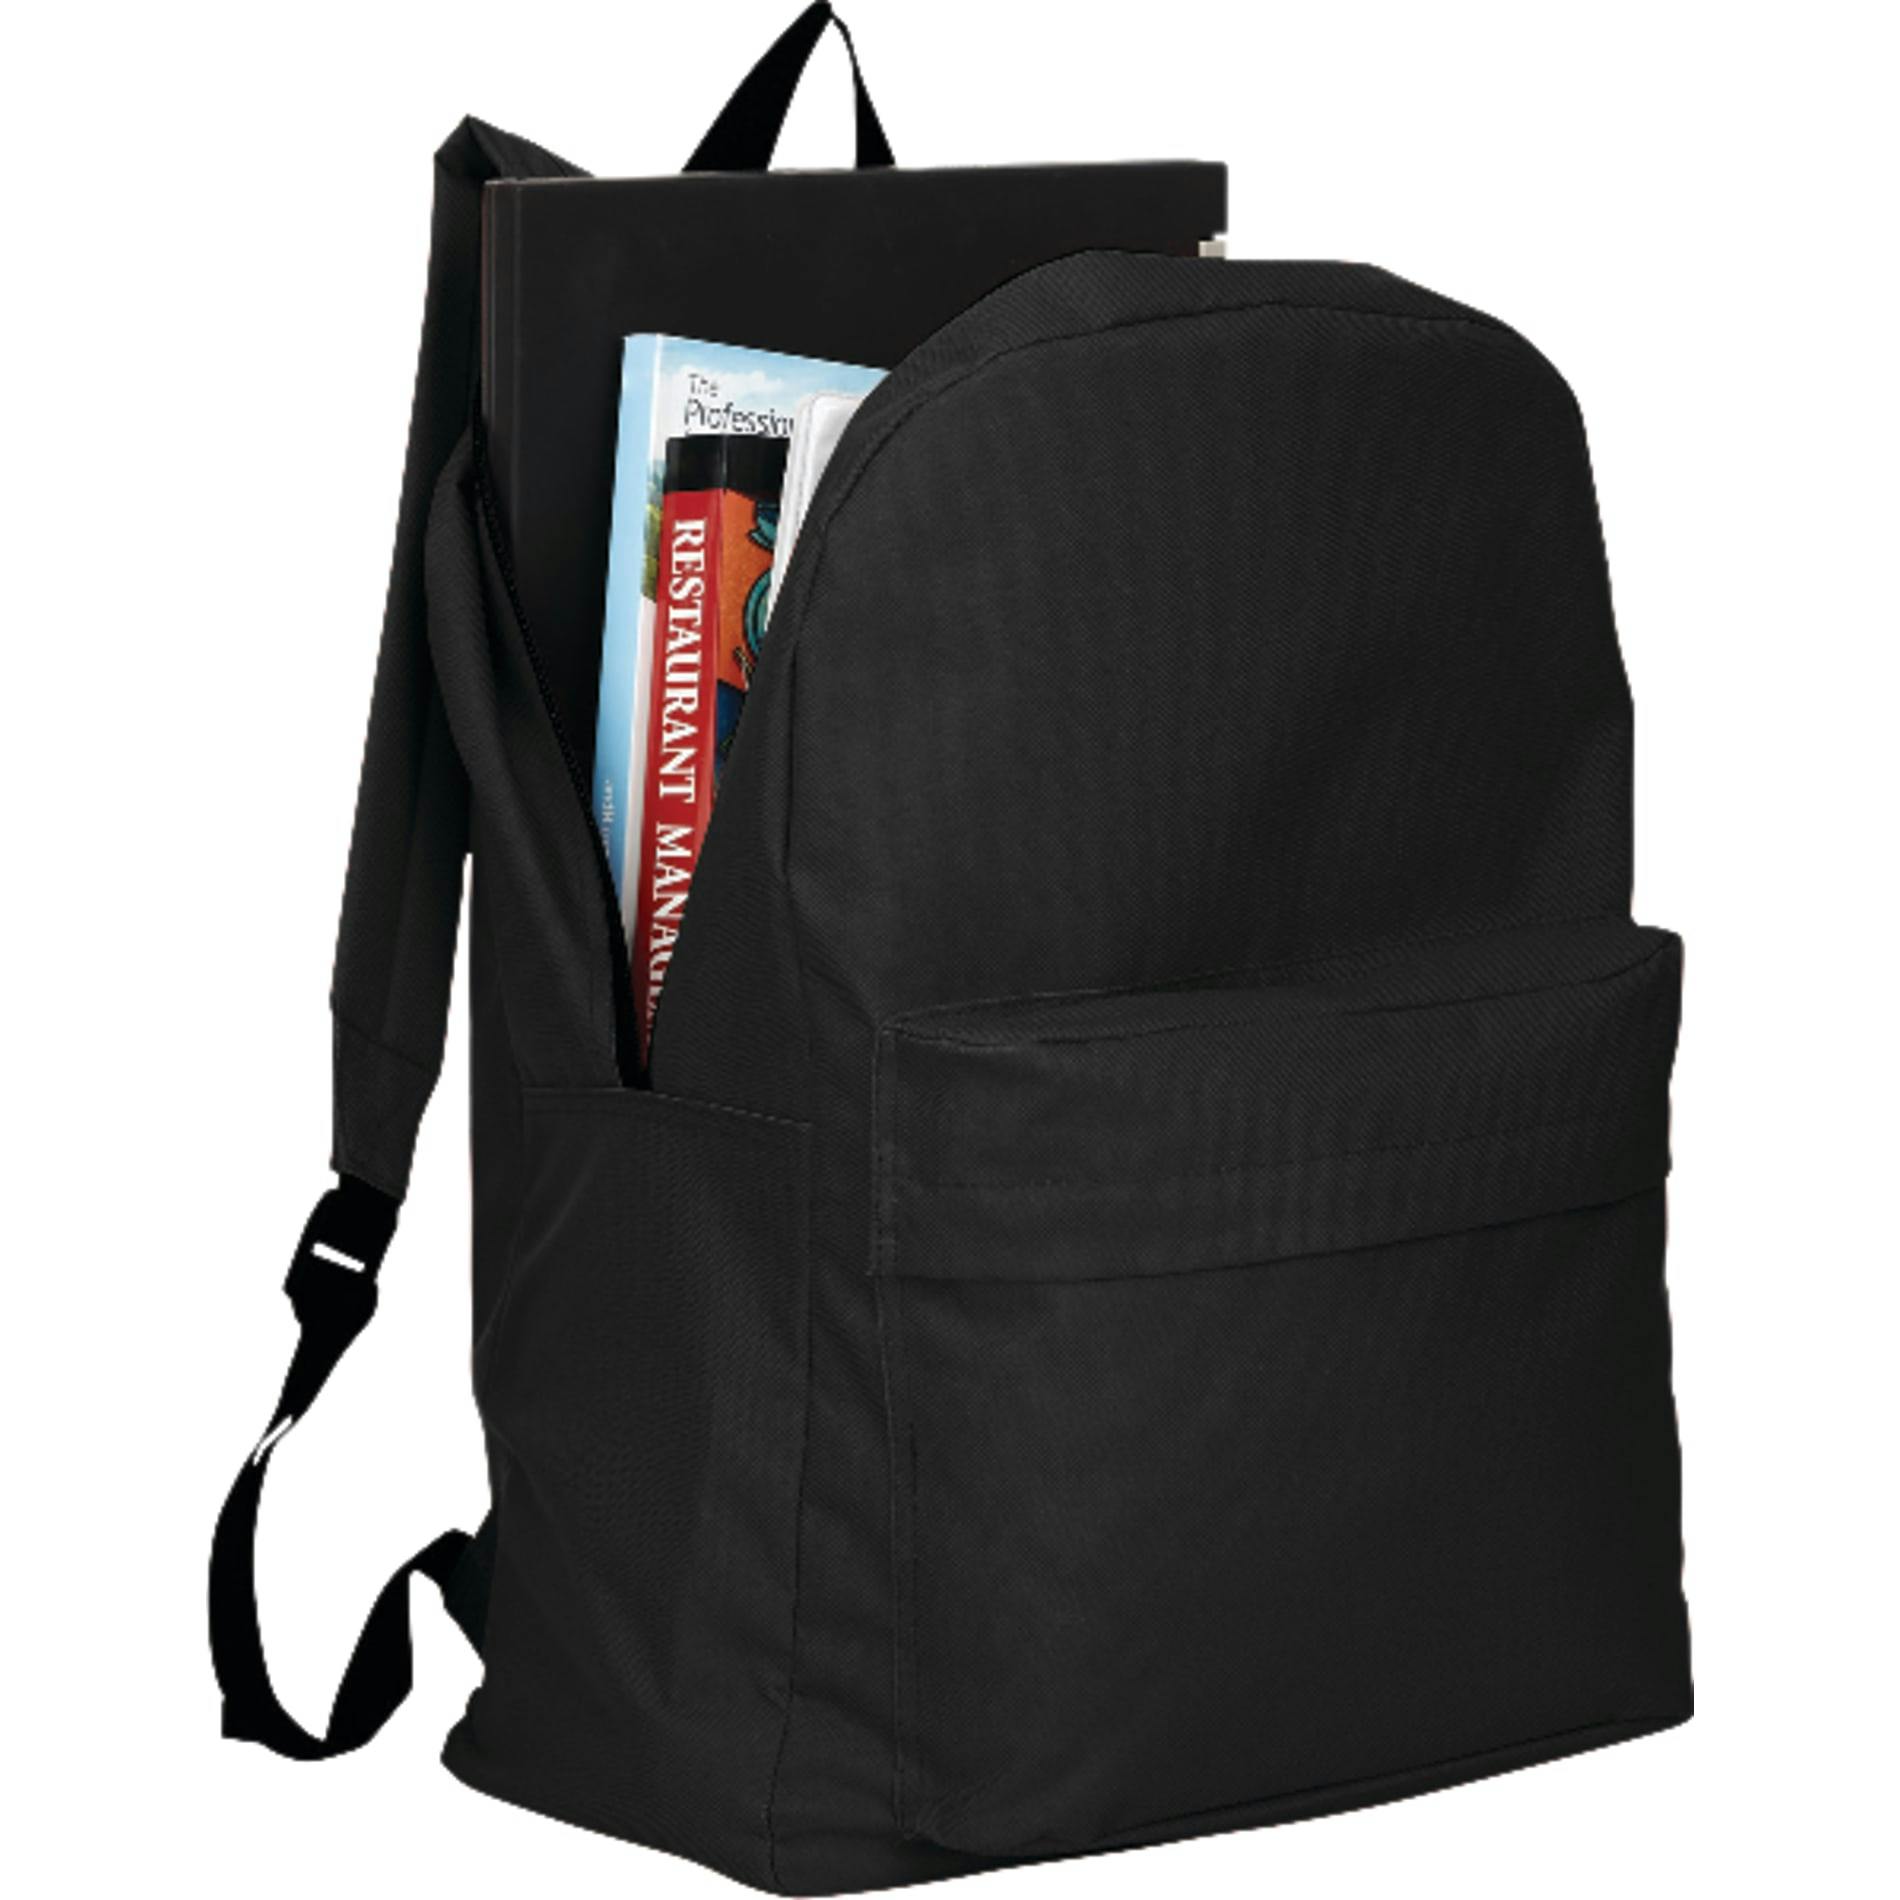 Buddy Budget 15" Computer Backpack - additional Image 2